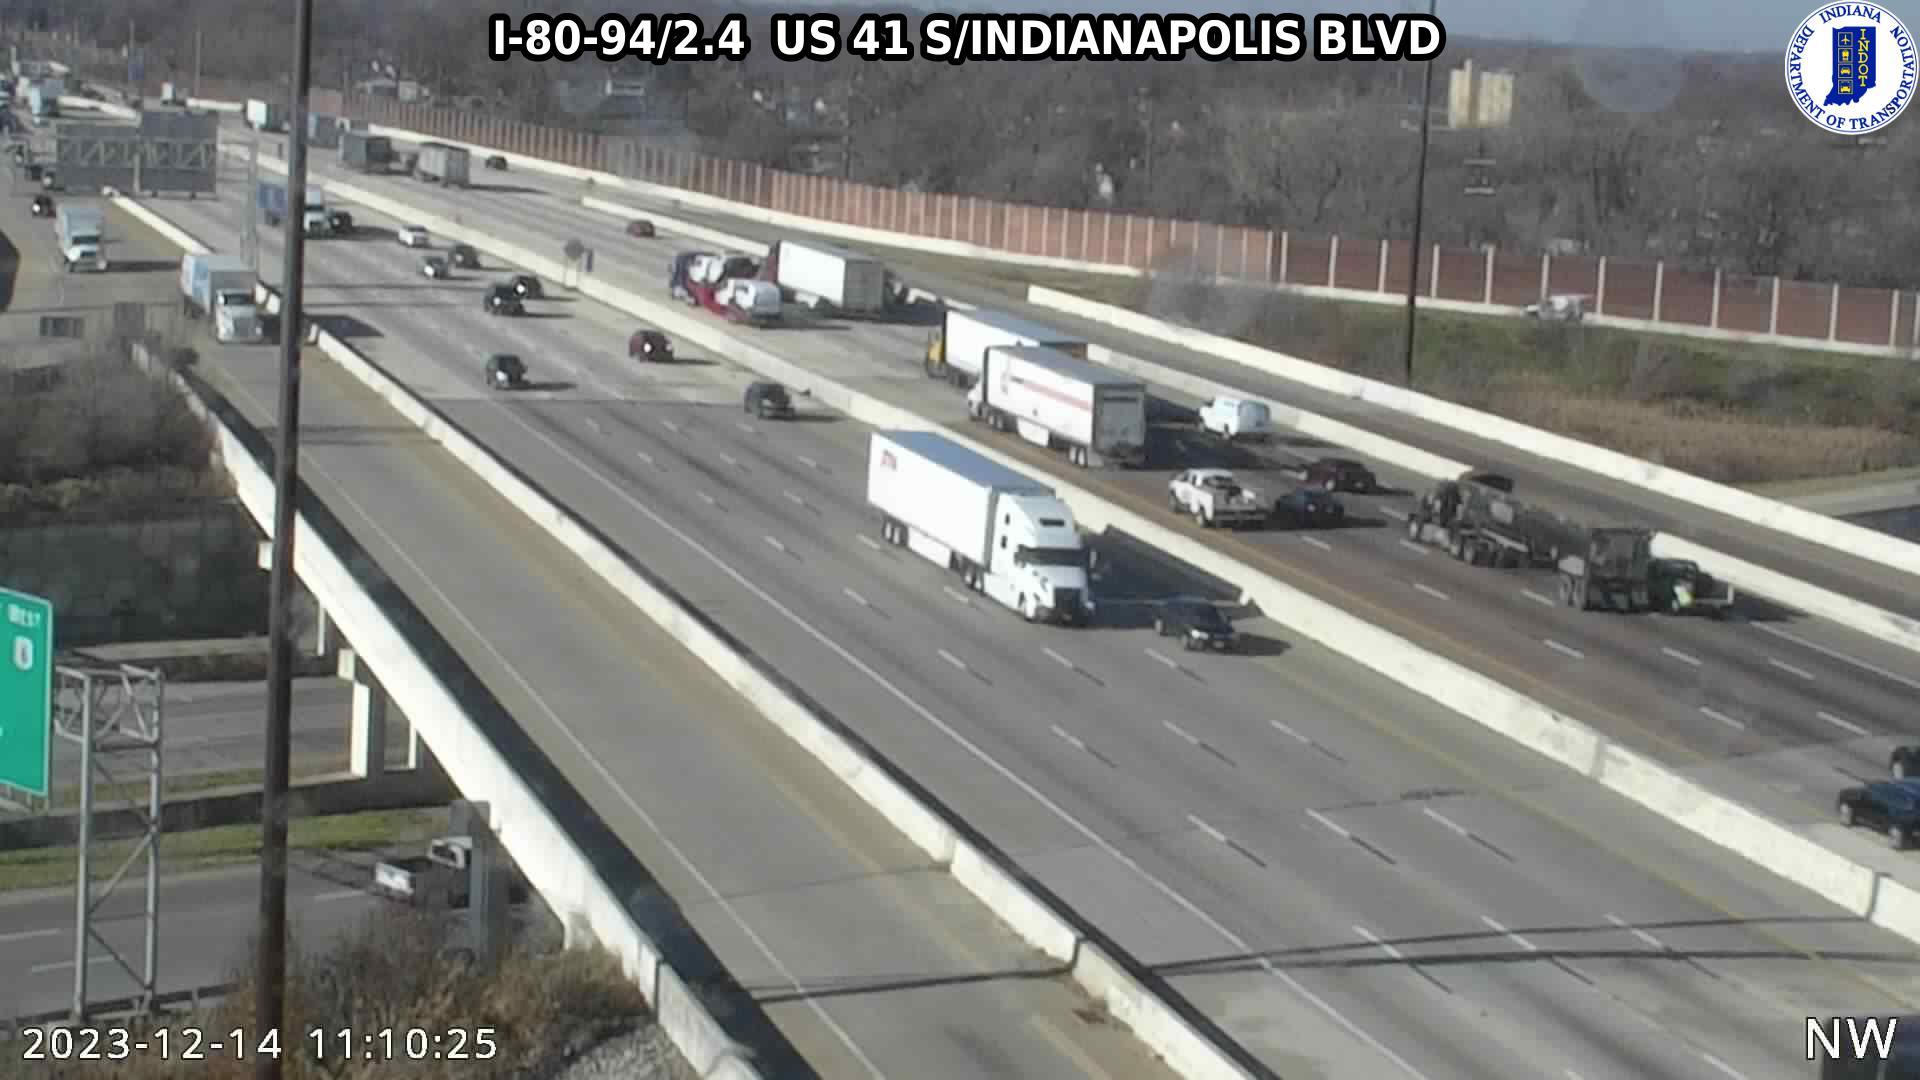 Traffic Cam Hammond: I-94: I-80-94/2.4 US 41 S/INDIANAPOLIS BLVD